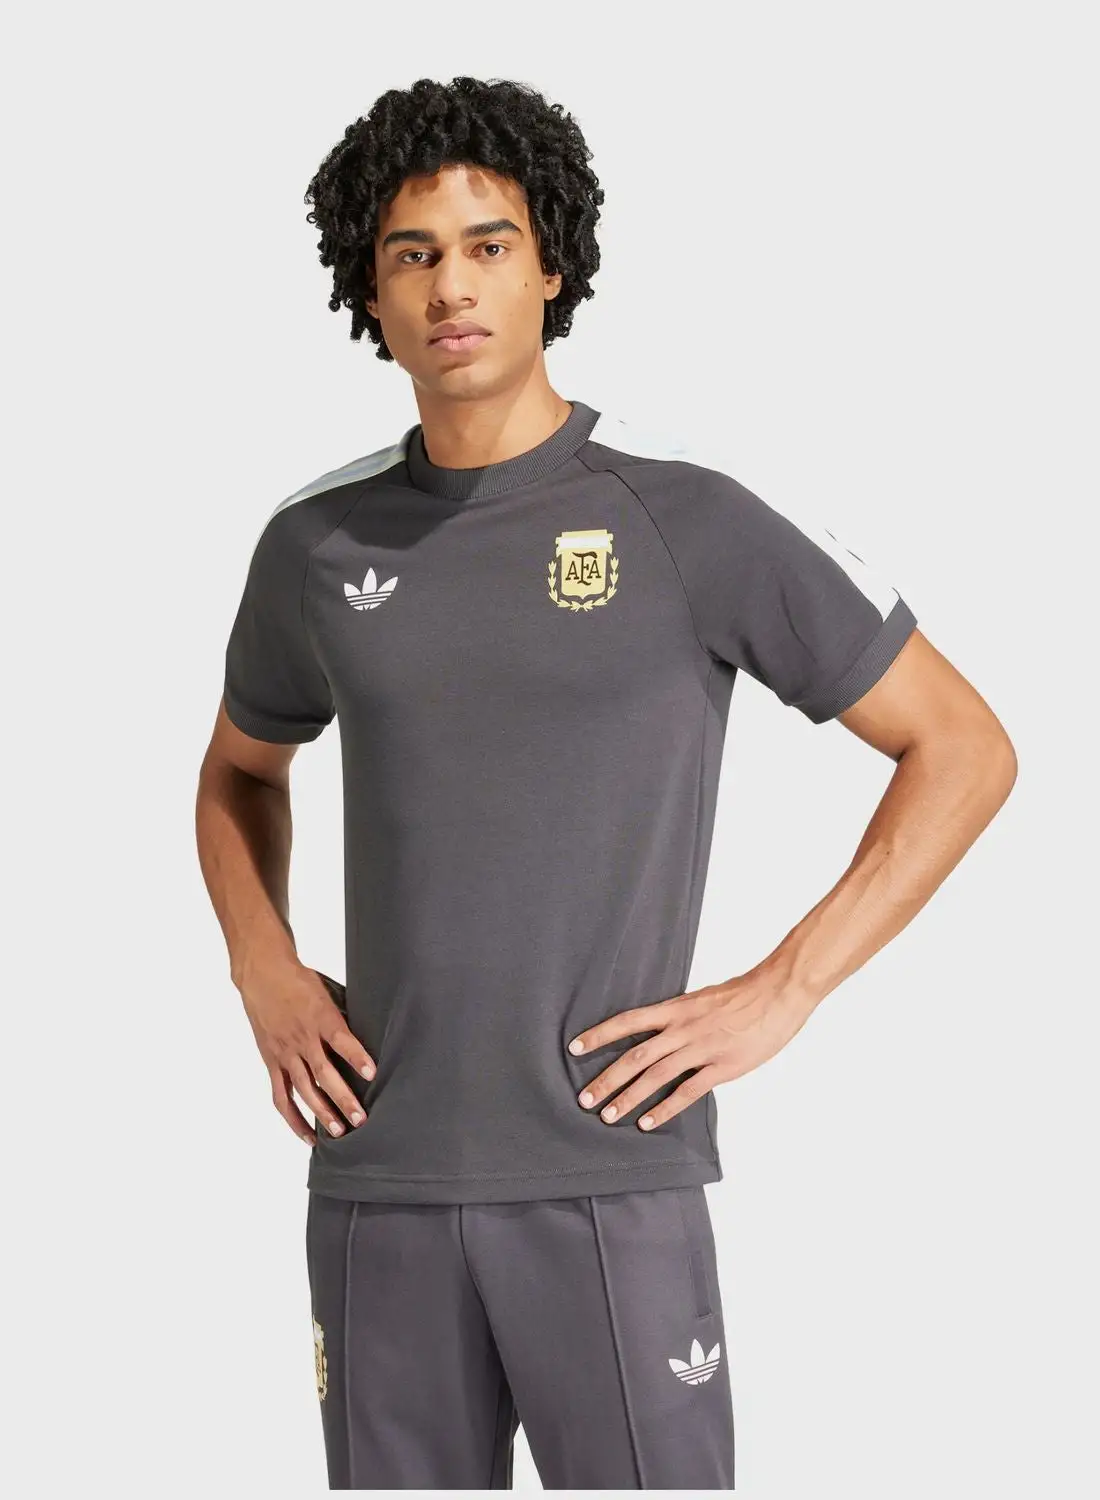 Adidas 3 Stripes Argentina Football Association T-Shirt